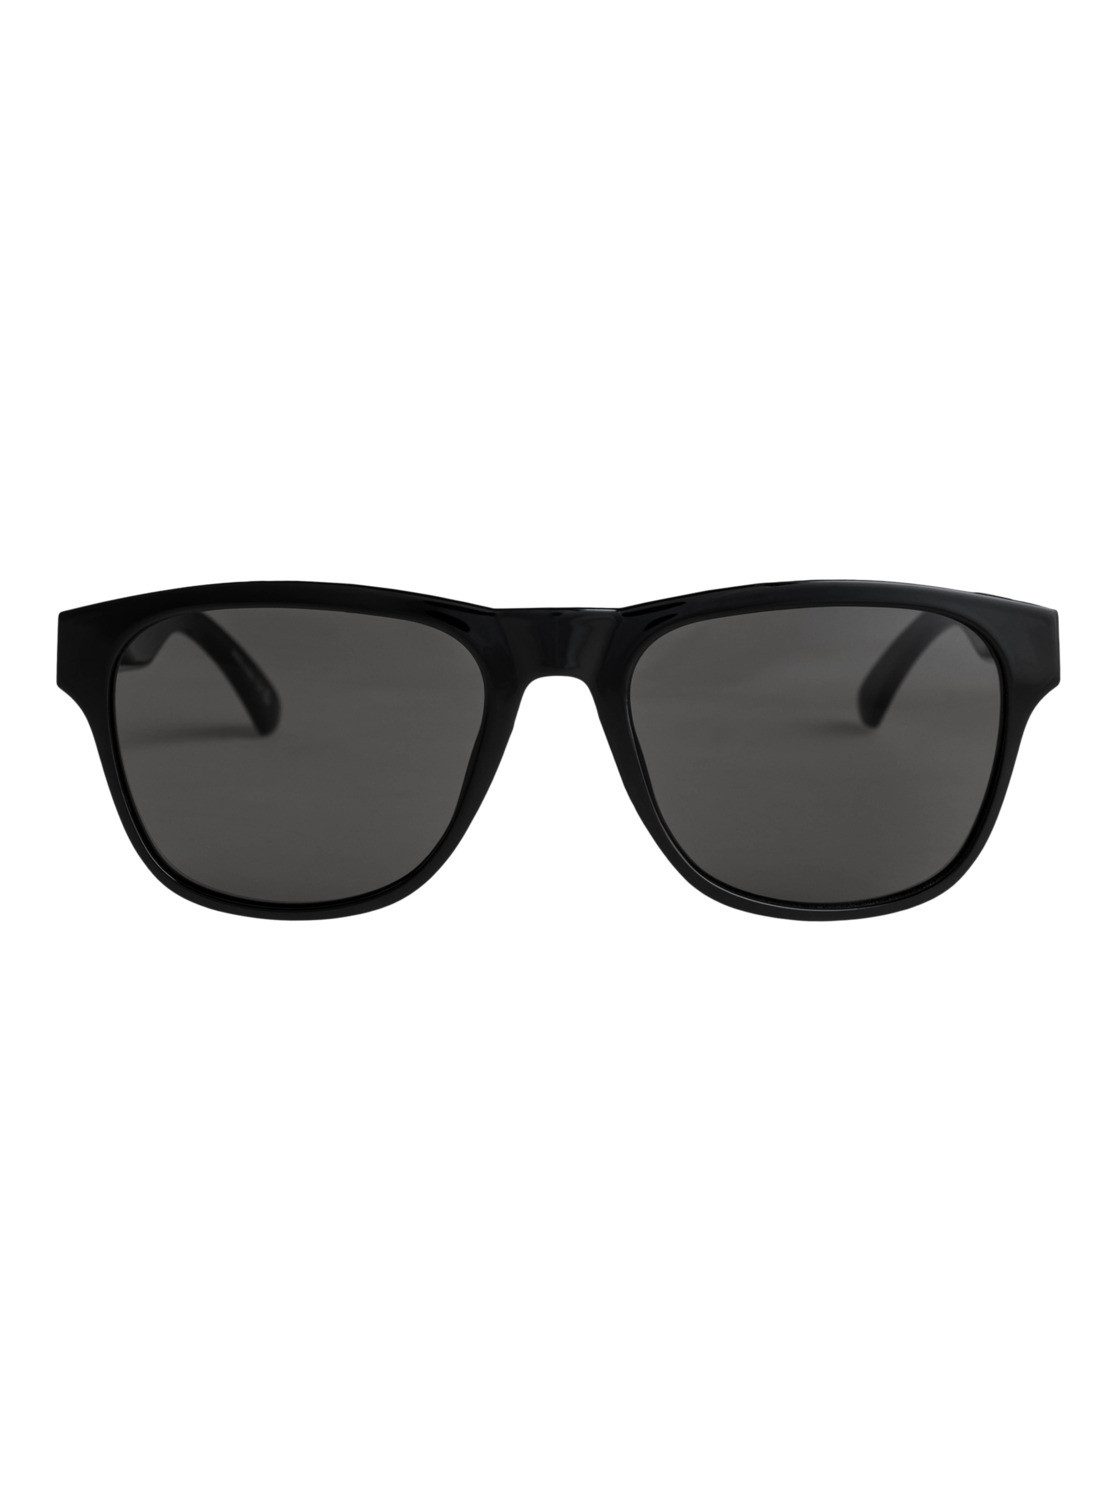 Tagger Sonnenbrille Quiksilver Black/Grey